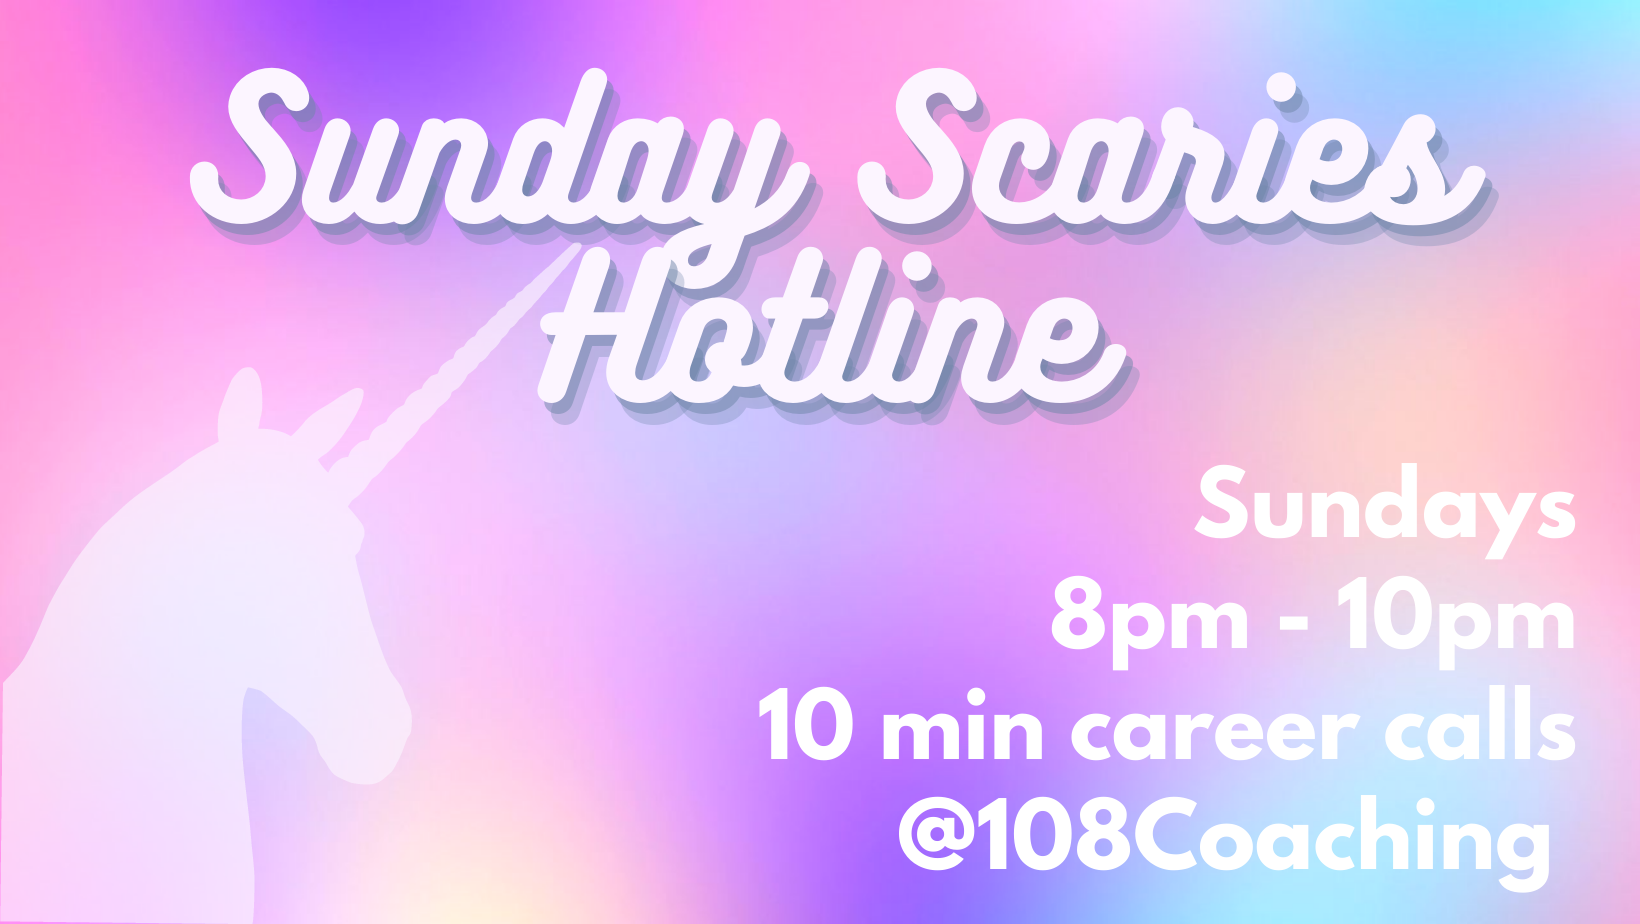 Sunday Scaries Hotline